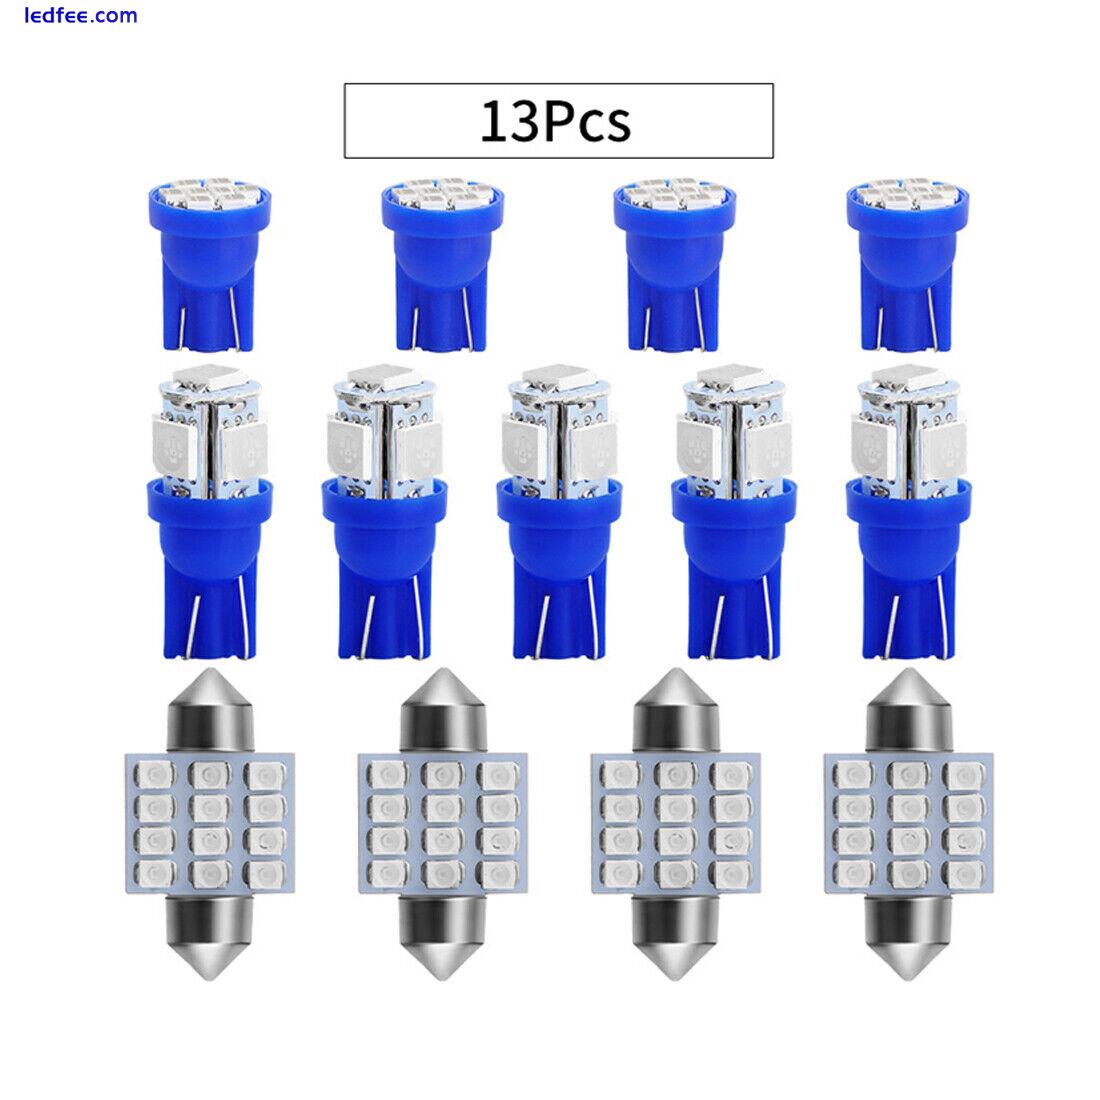 13Pcs Car Interior LED Lights Dome License Plate Lamp 12V Kit Accessories Blue 2 